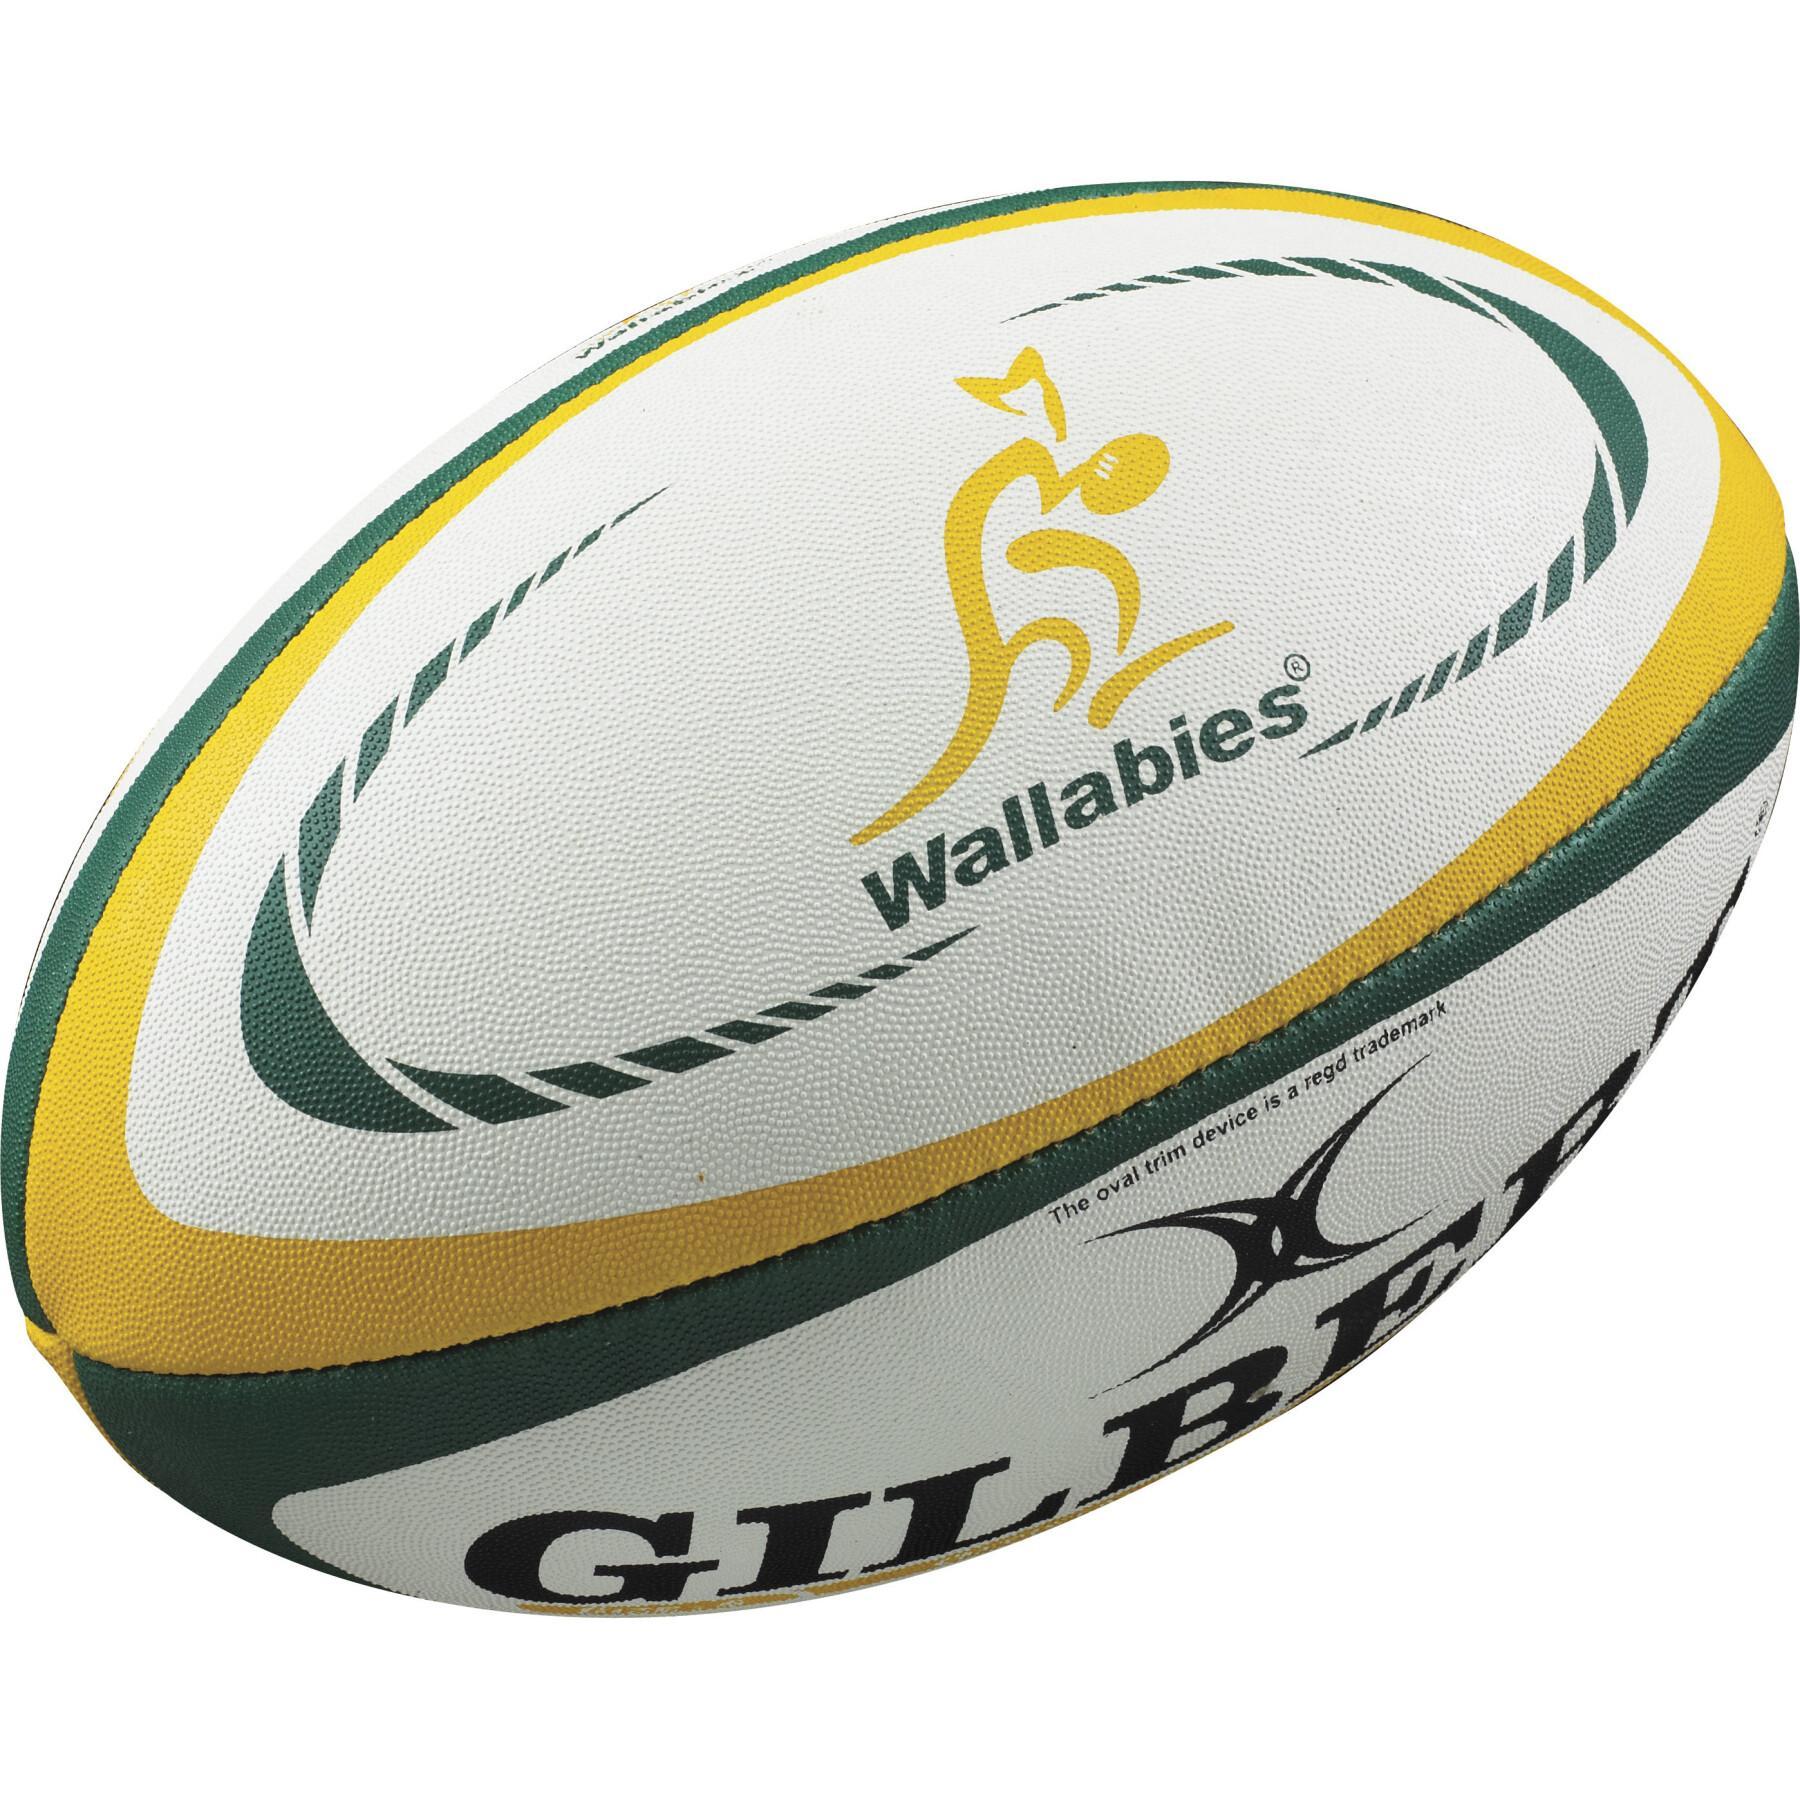 Rugby ball mini replica Gilbert Australie (taille 1)